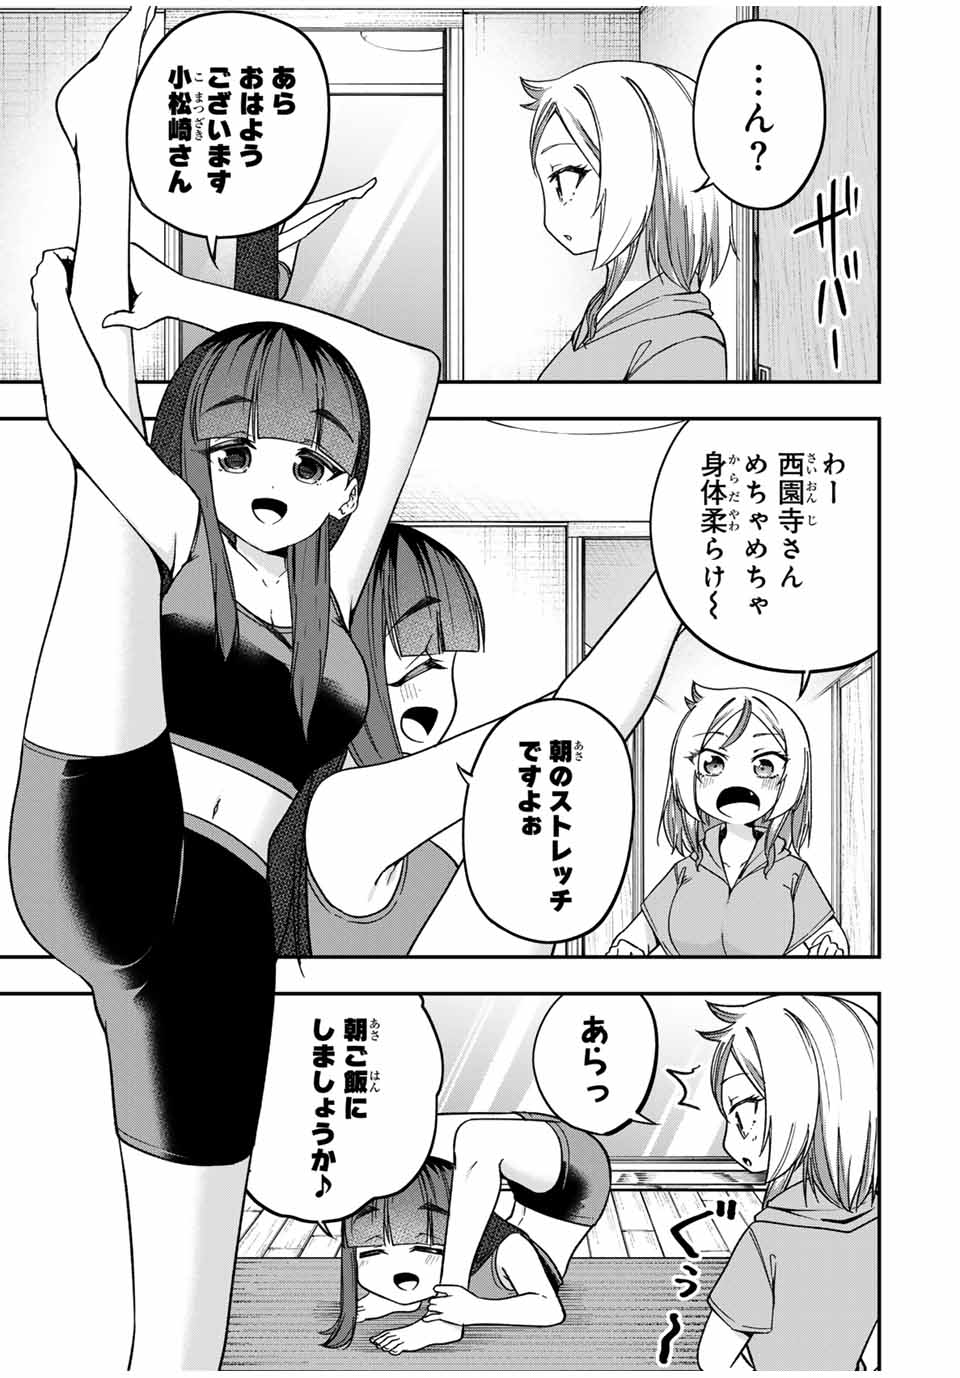 Heroine wa xx Okasegitai - Chapter 7 - Page 3